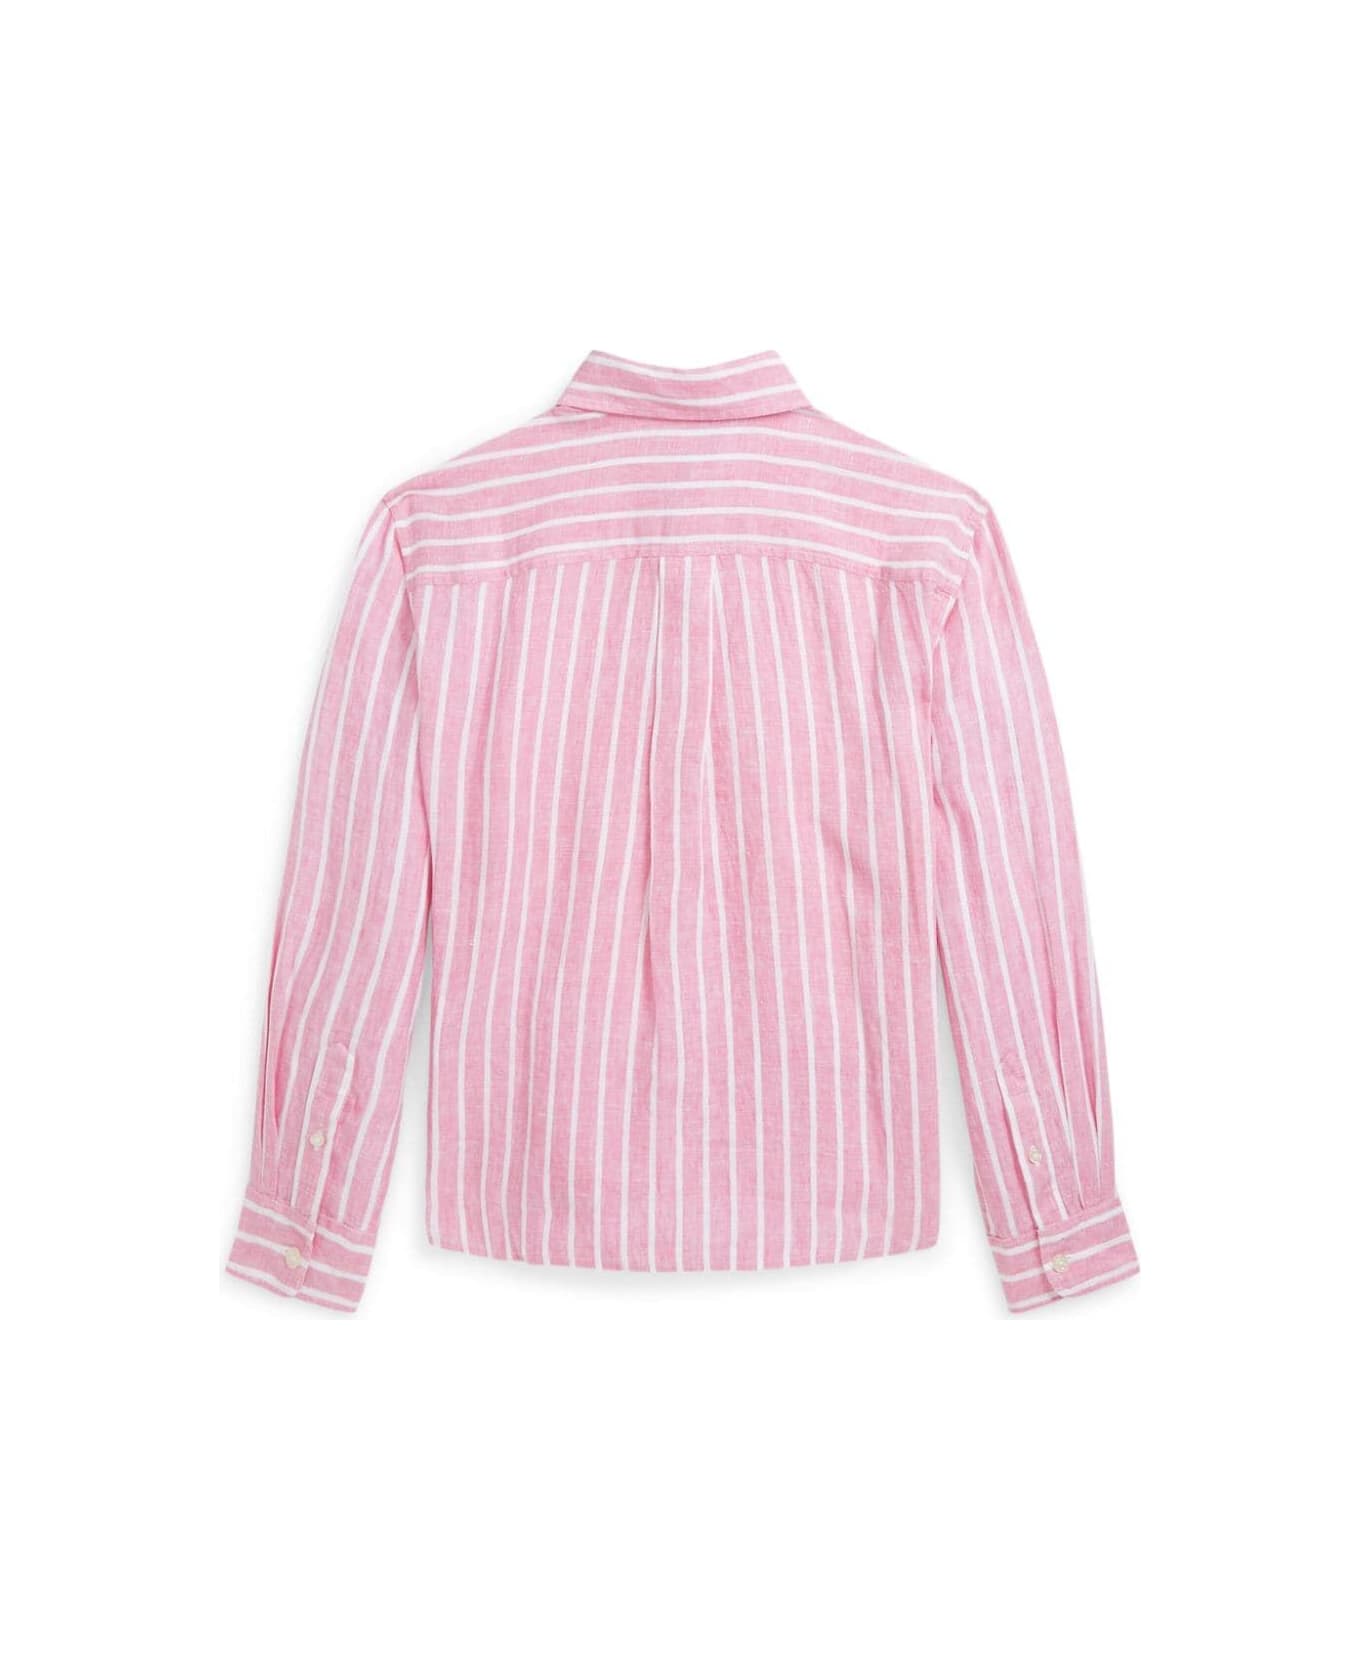 Polo Ralph Lauren Lismoreshirt Shirts Button Front Shirt - Pink White シャツ